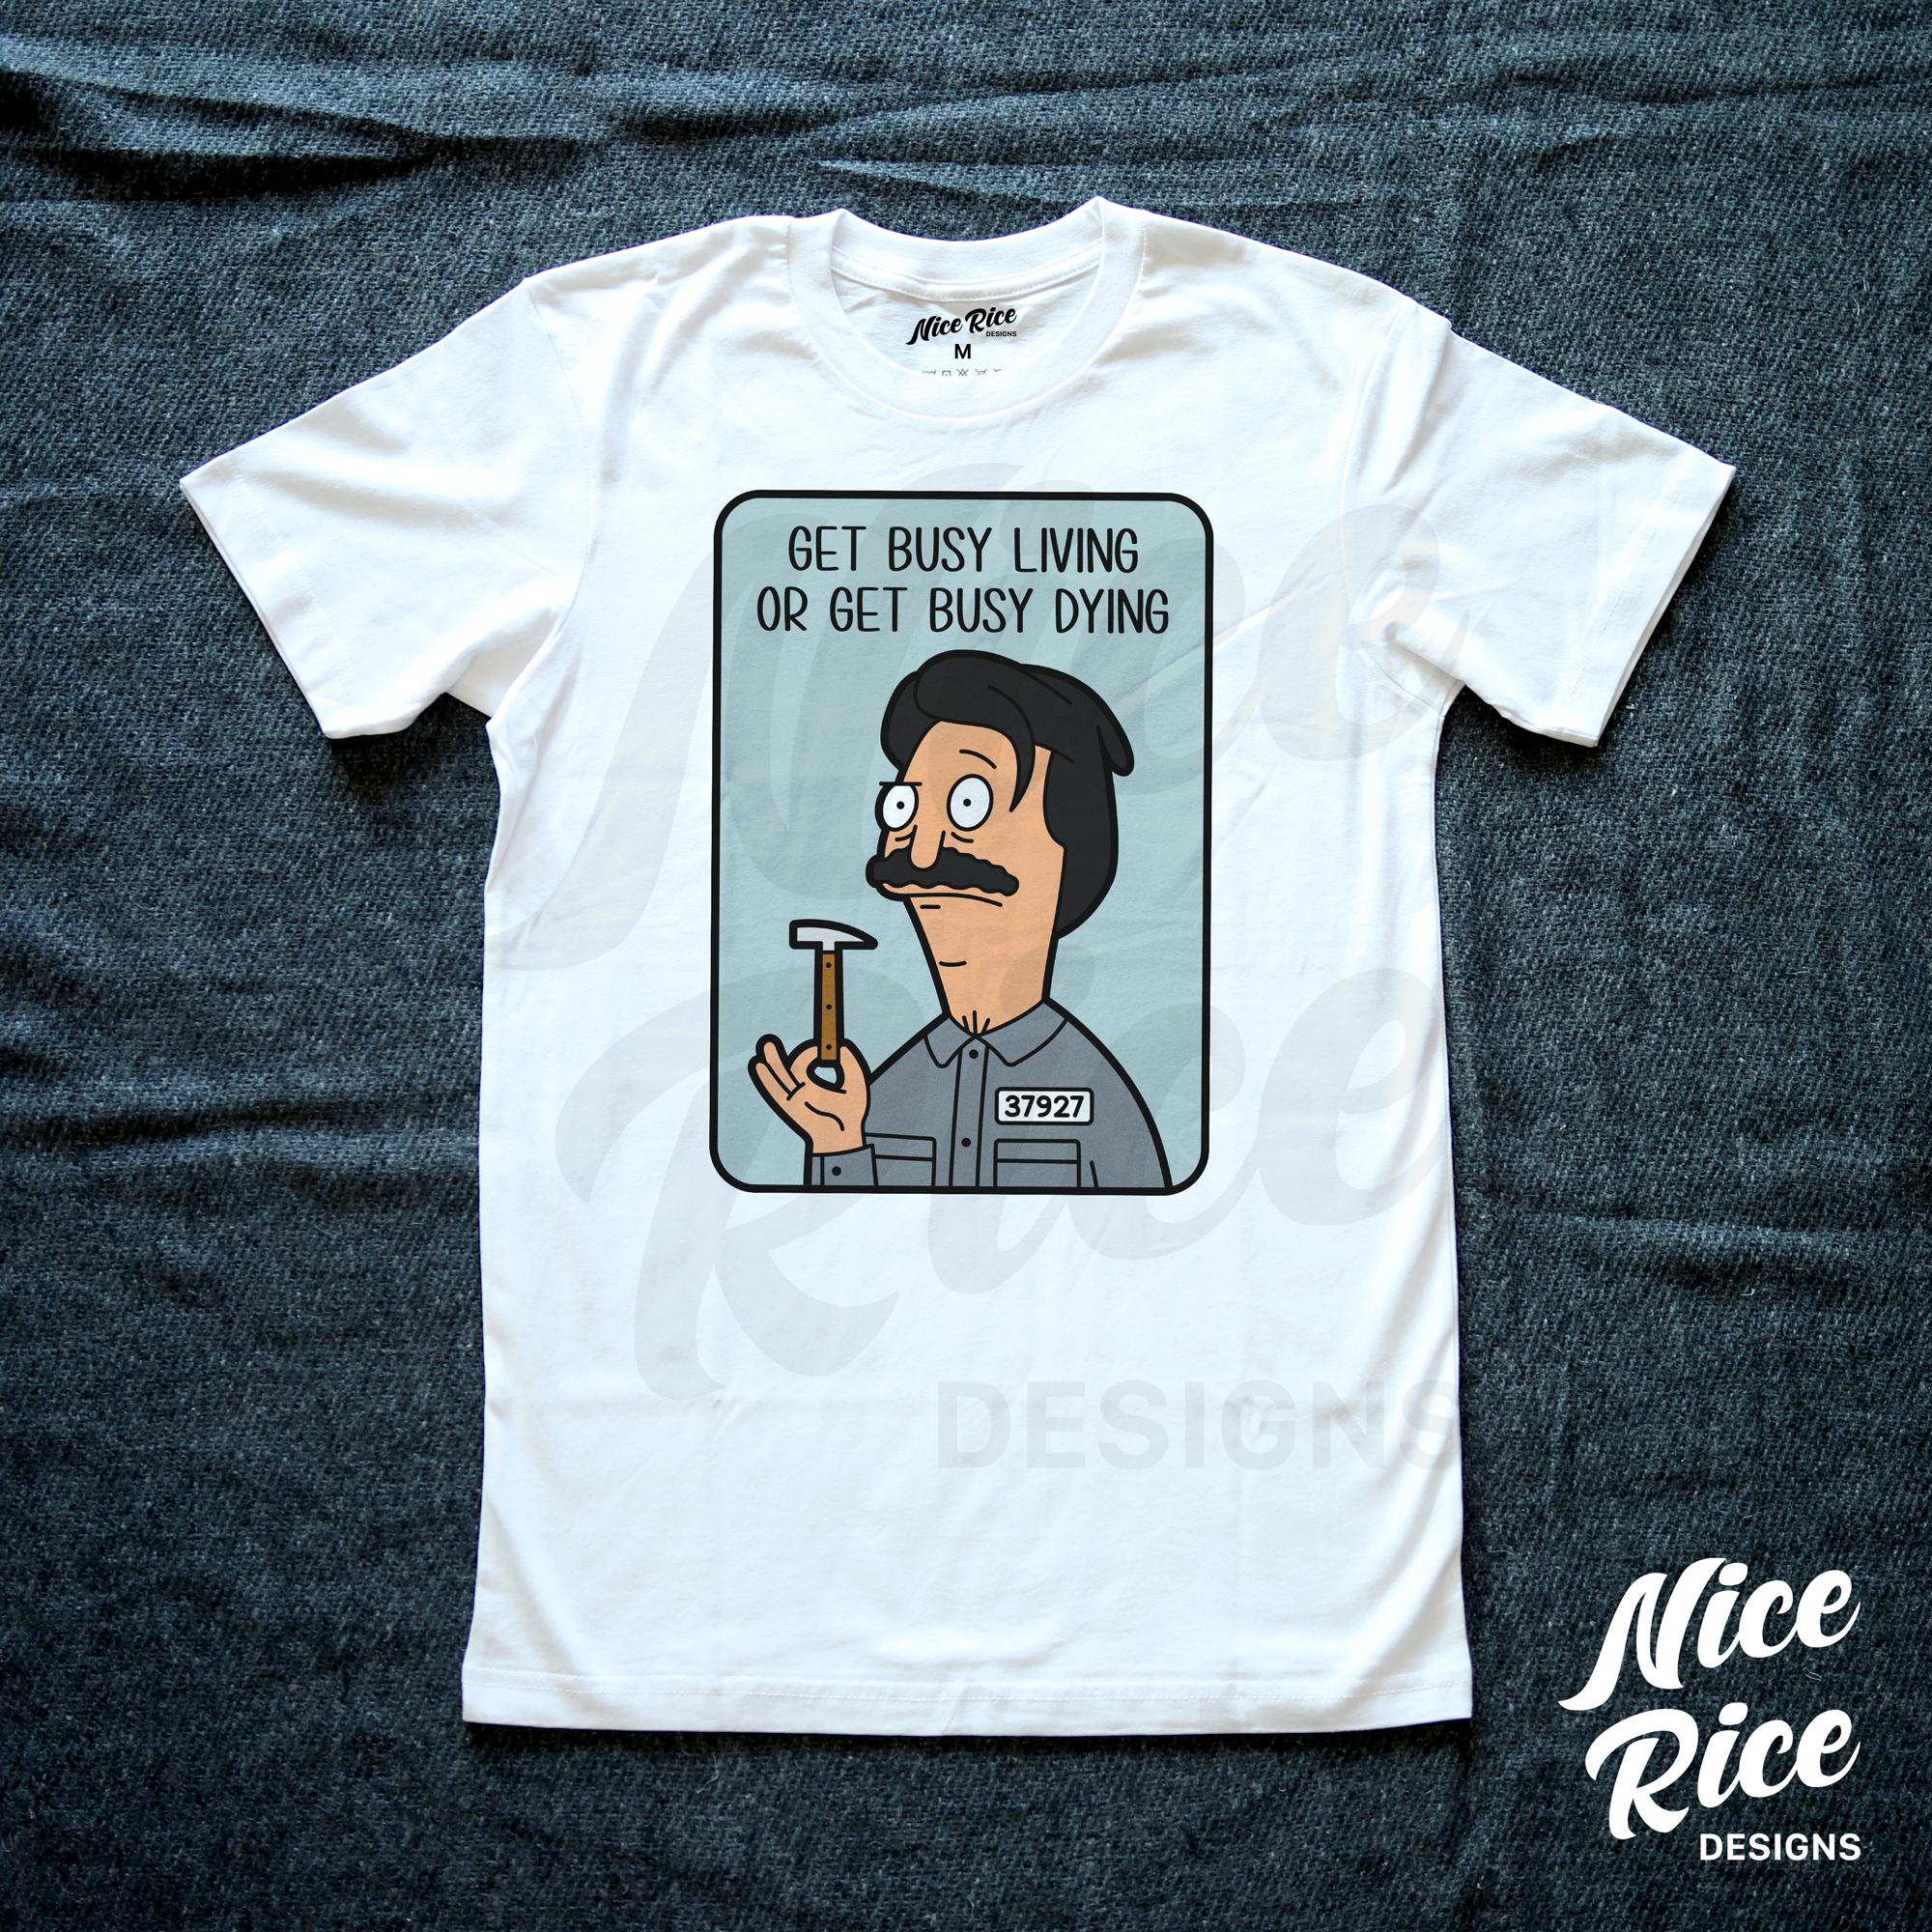 Shawshank Shirt by Nice Rice Designs